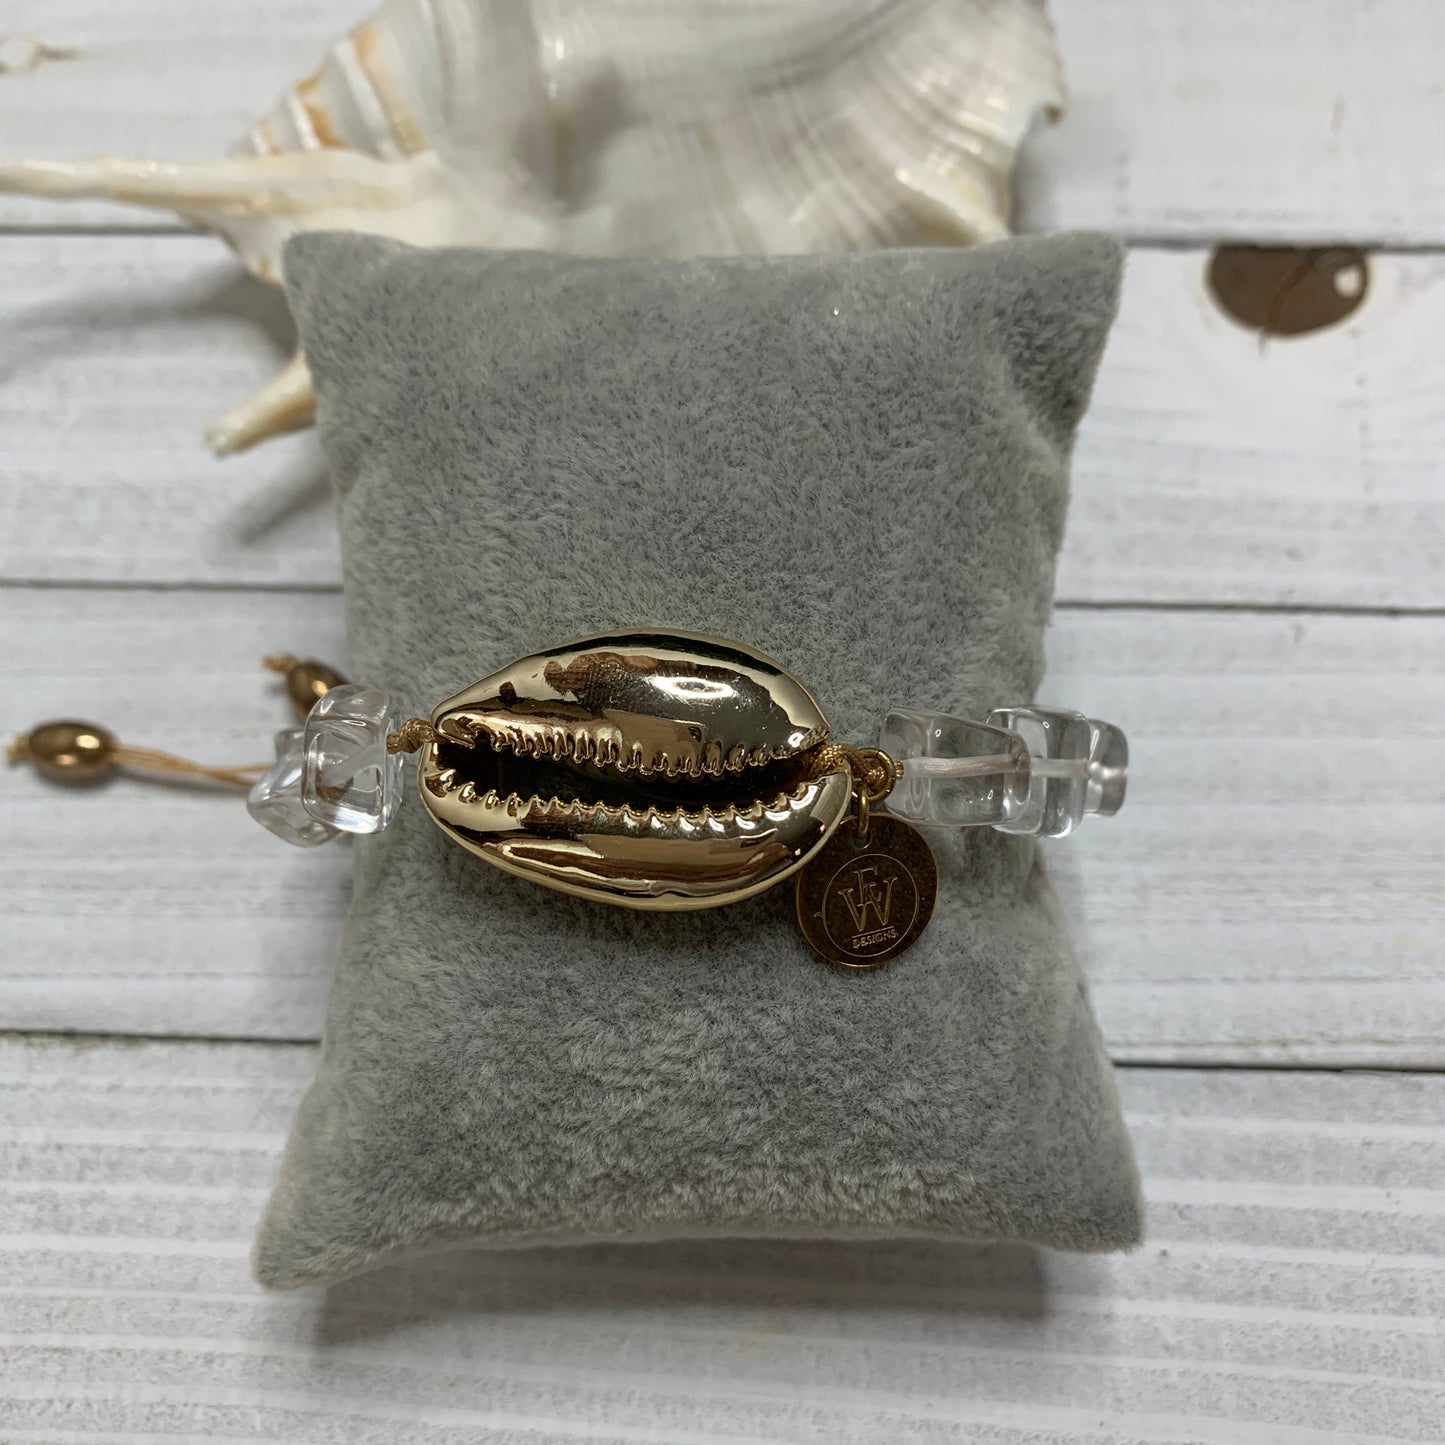 Quartz Stones and a Gold Plated Cowry Shell Bracelet